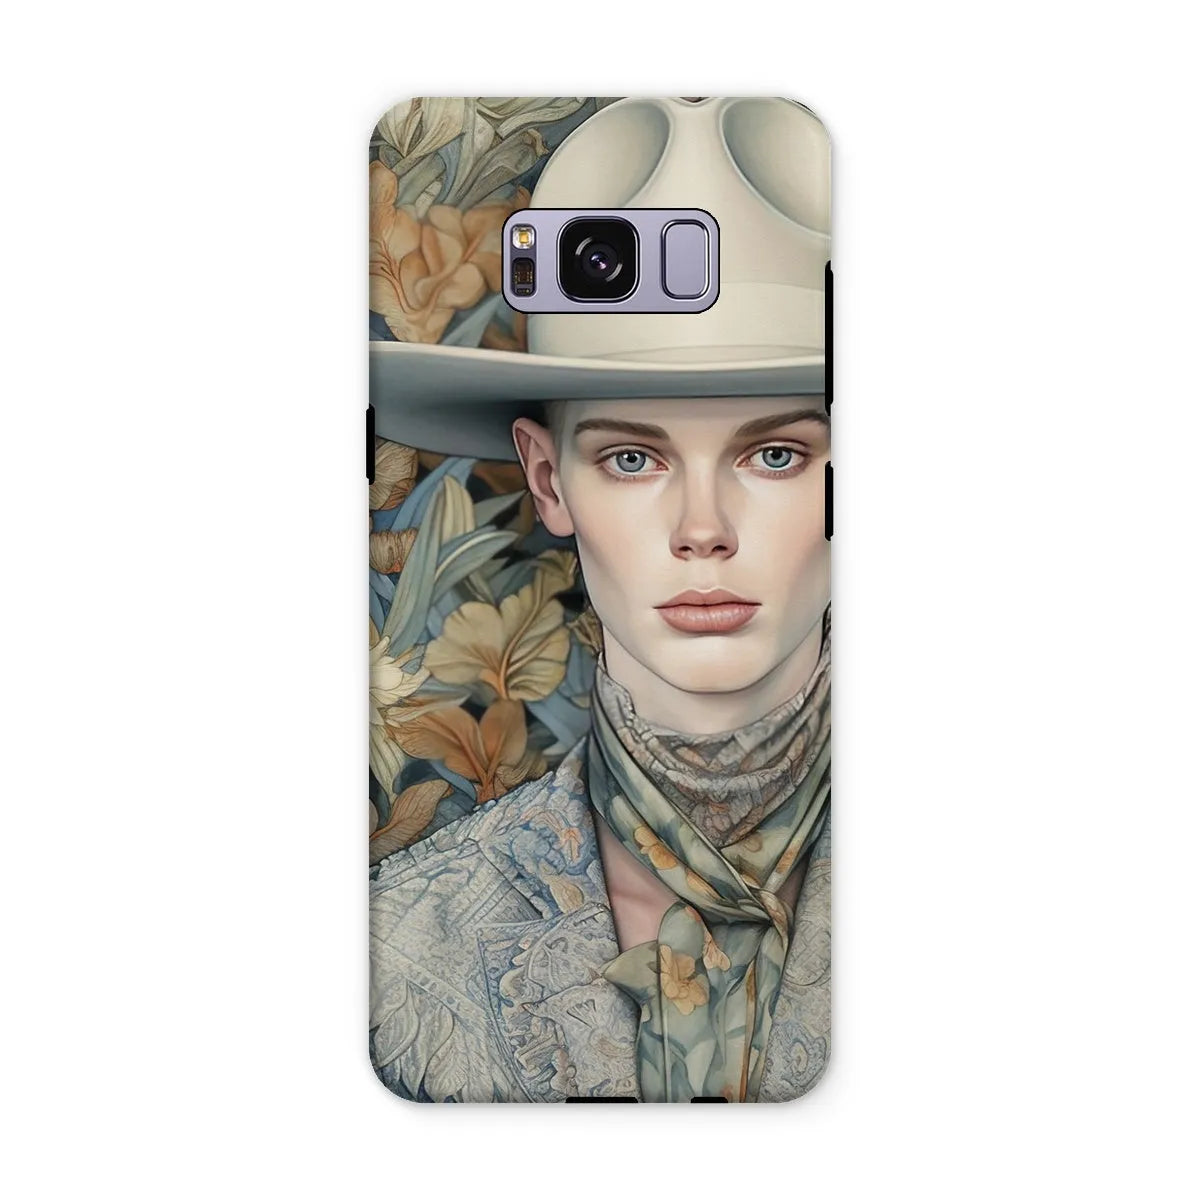 Jasper - Dandy Twink Cowboy Aesthetic Art Phone Case - Samsung Galaxy S8 Plus / Matte - Mobile Phone Cases - Aesthetic